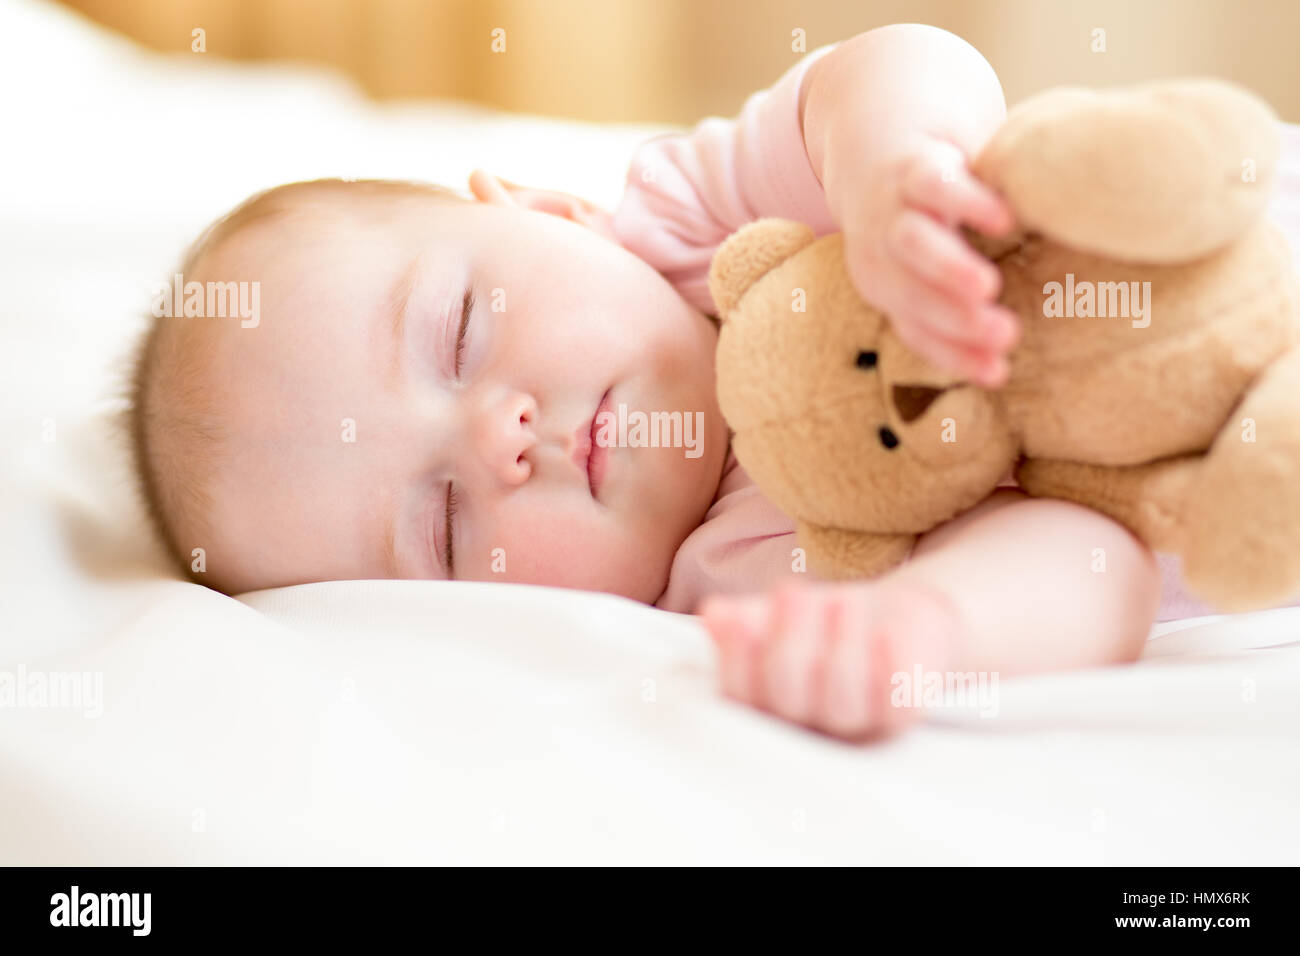 infant baby sleeping with plush toy Stock Photo